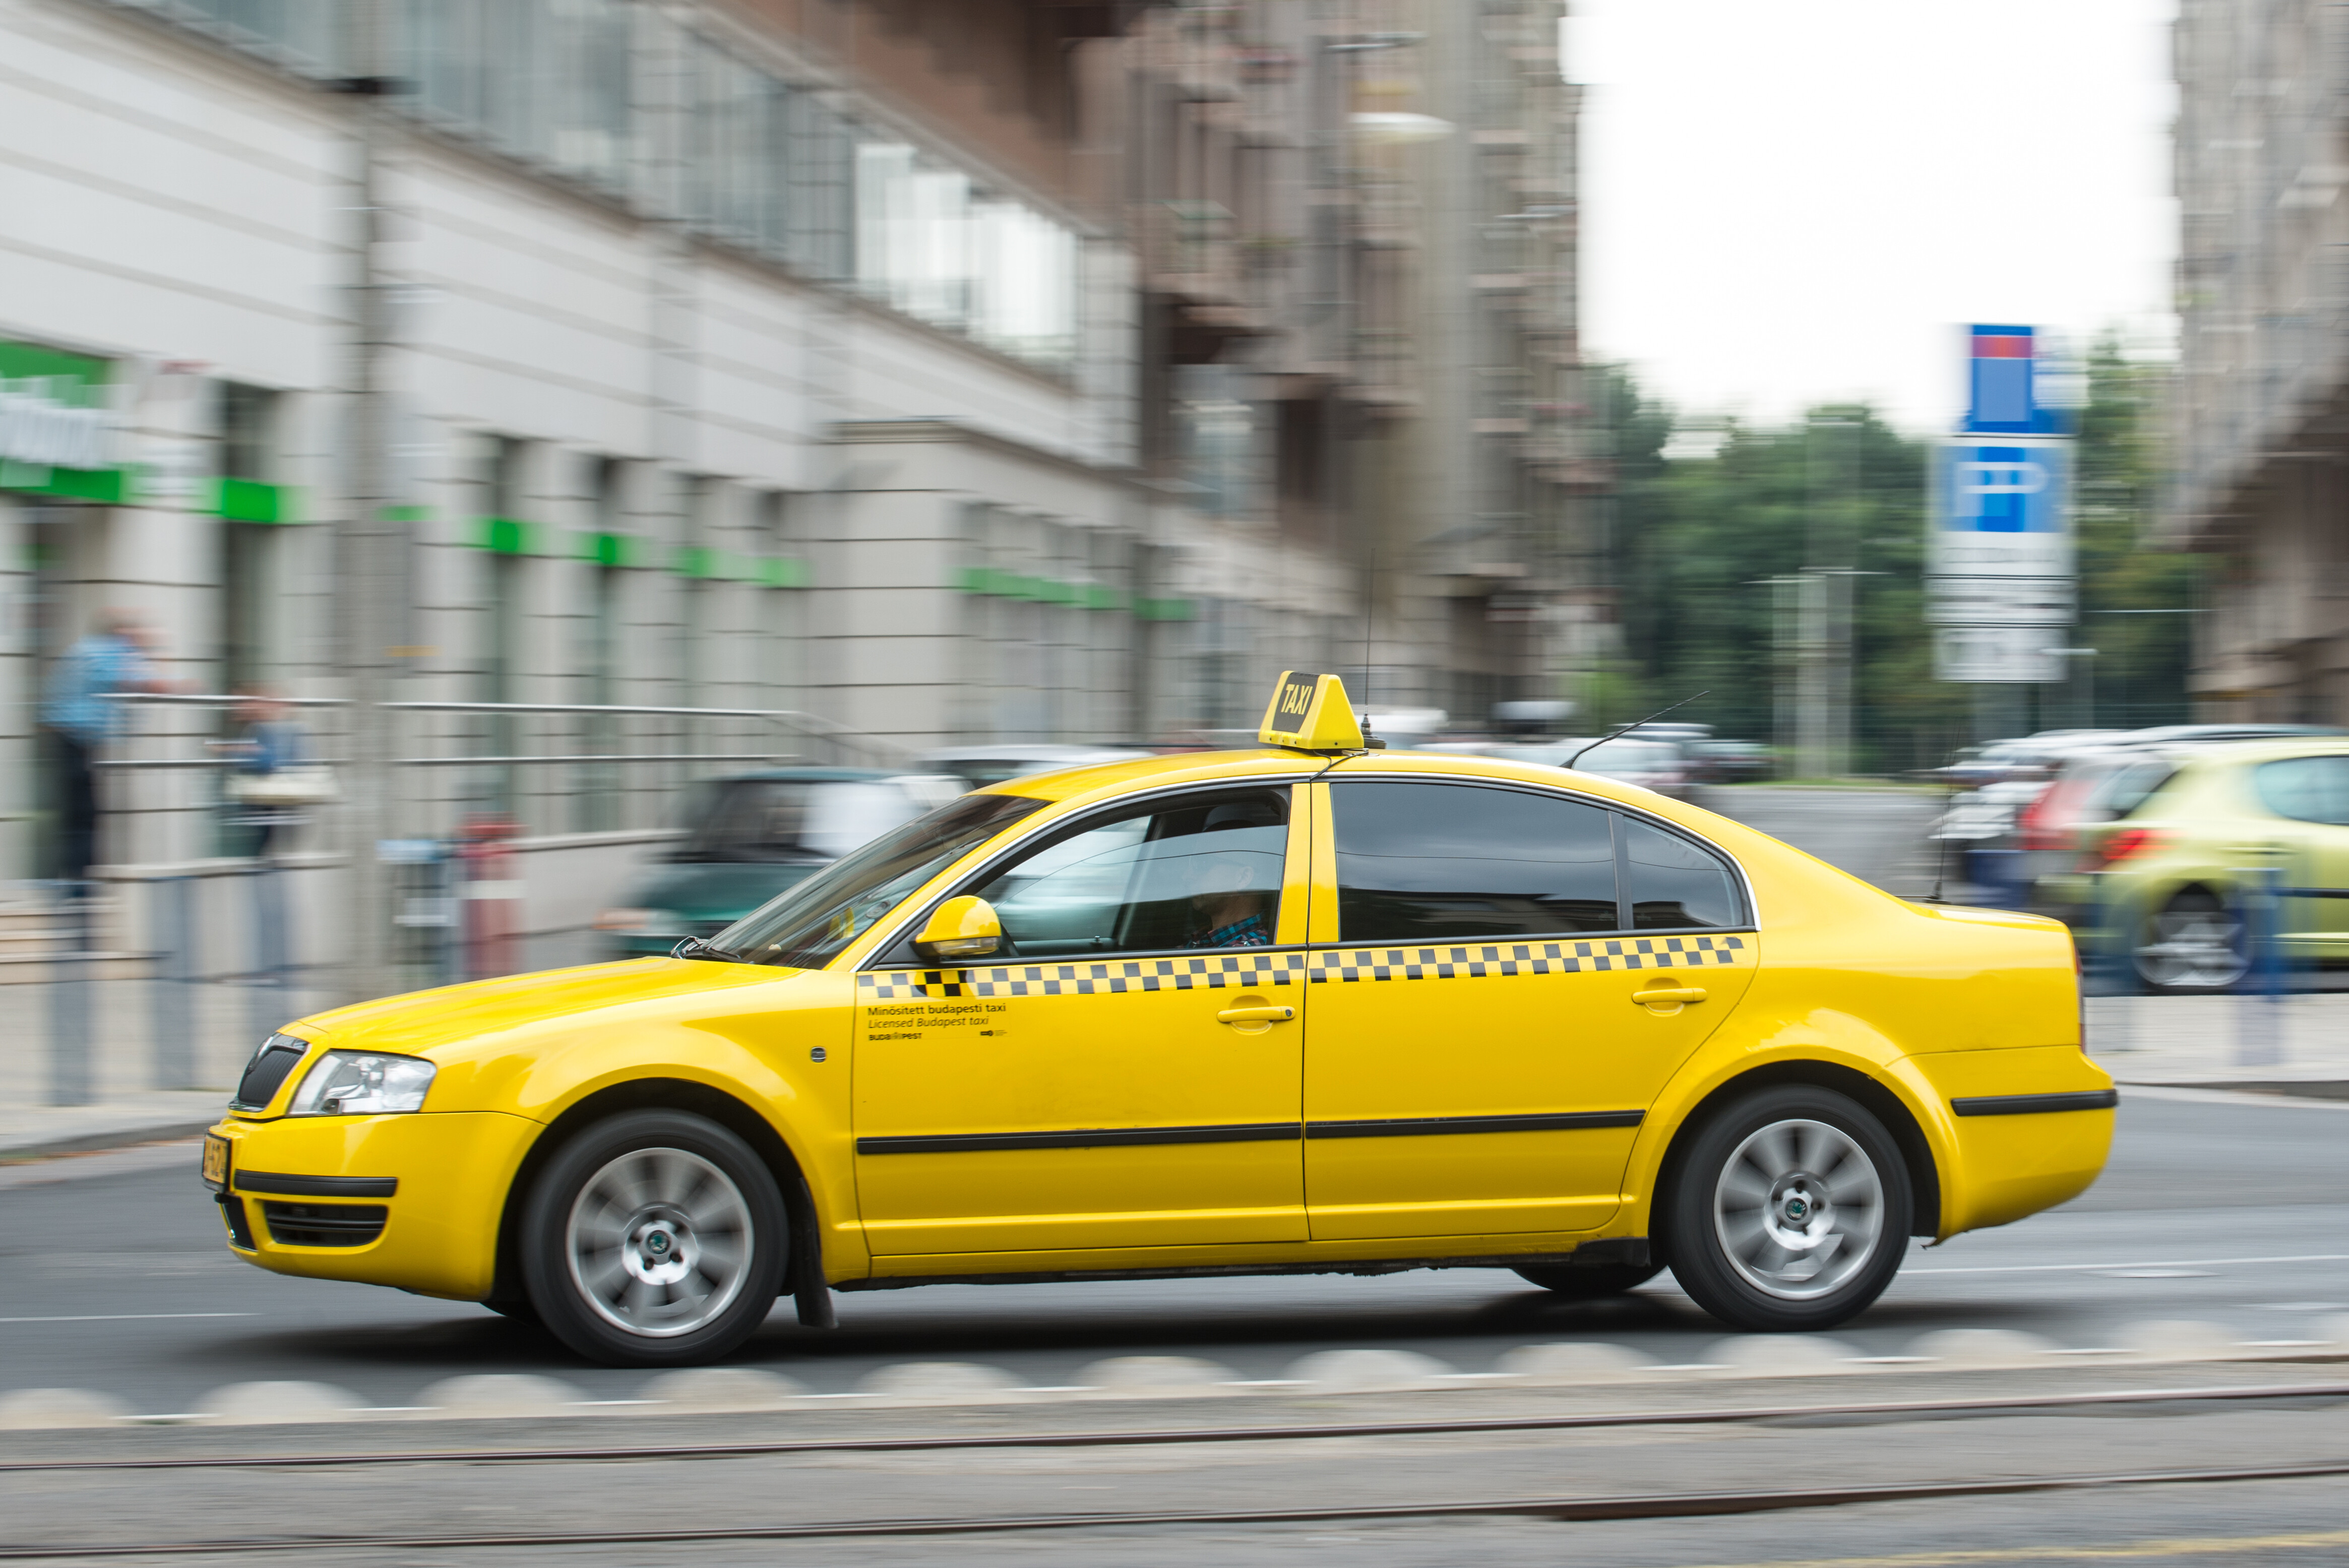 sárga taxi egy budapesti utcán